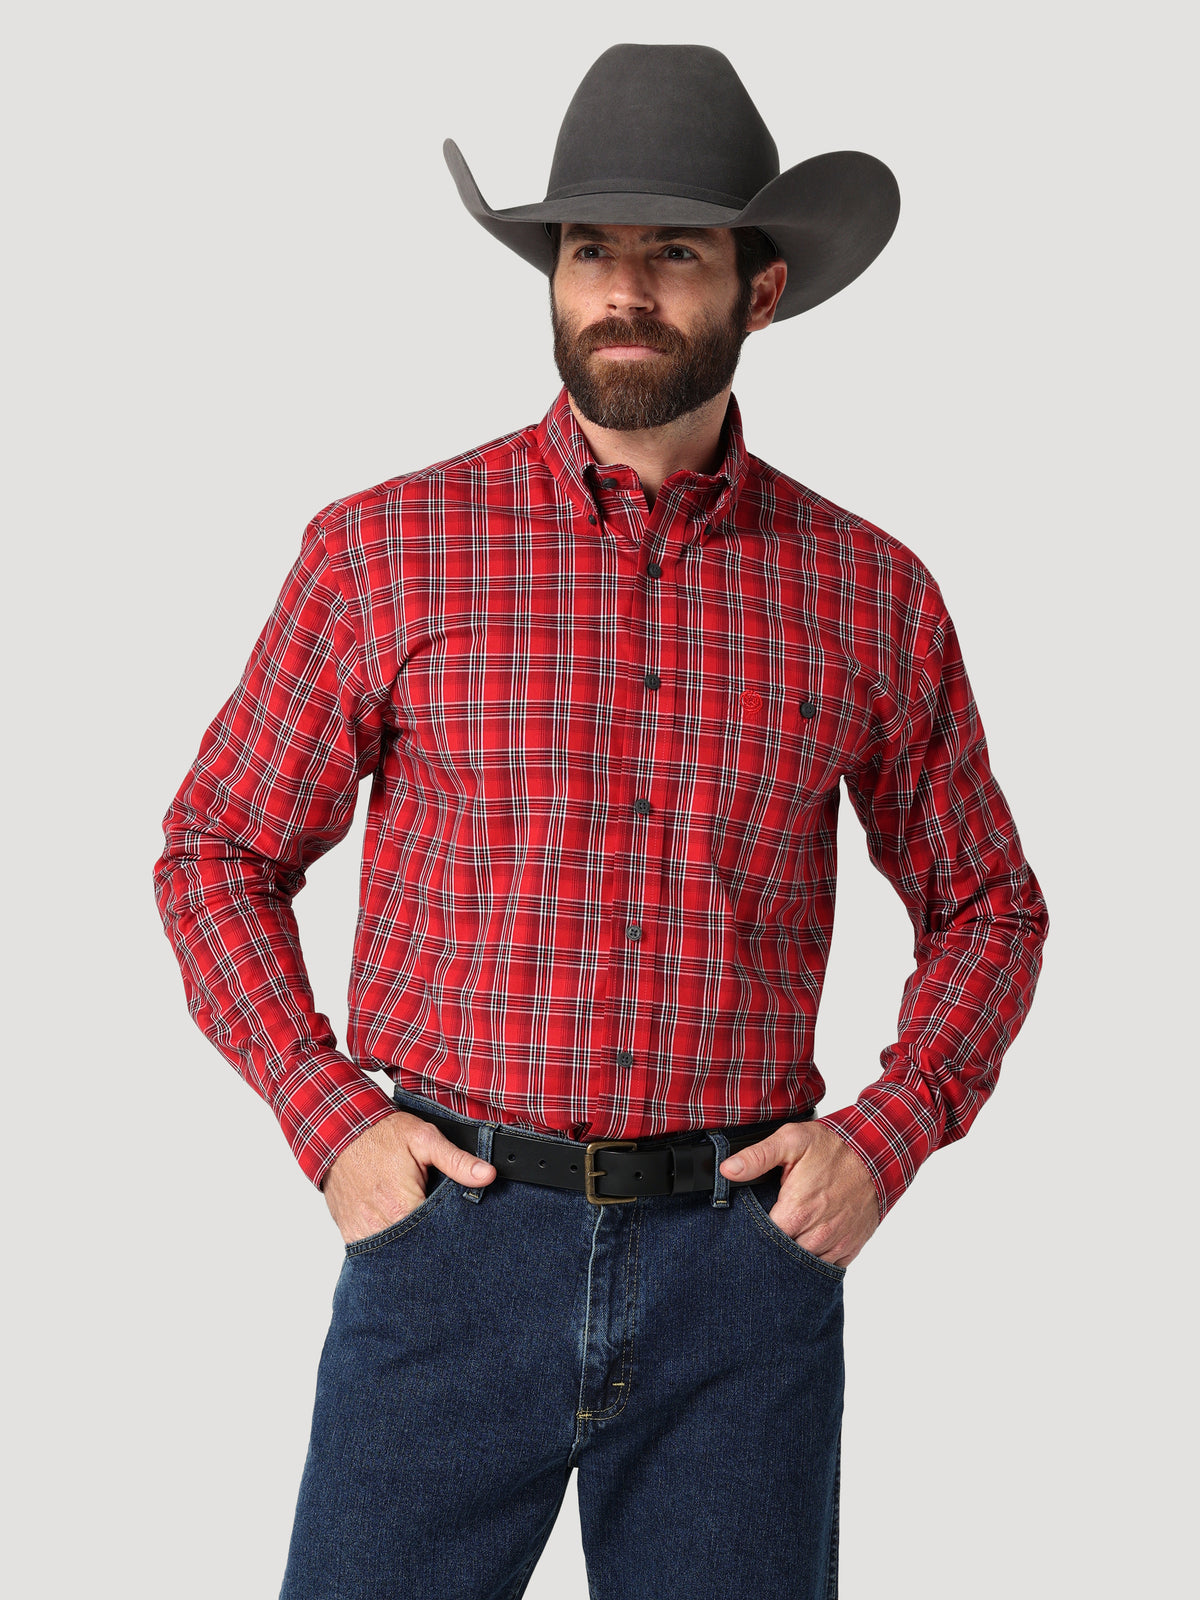 Men's George Strait Long Sleeve Button Down Two Pocket Plaid Shirt